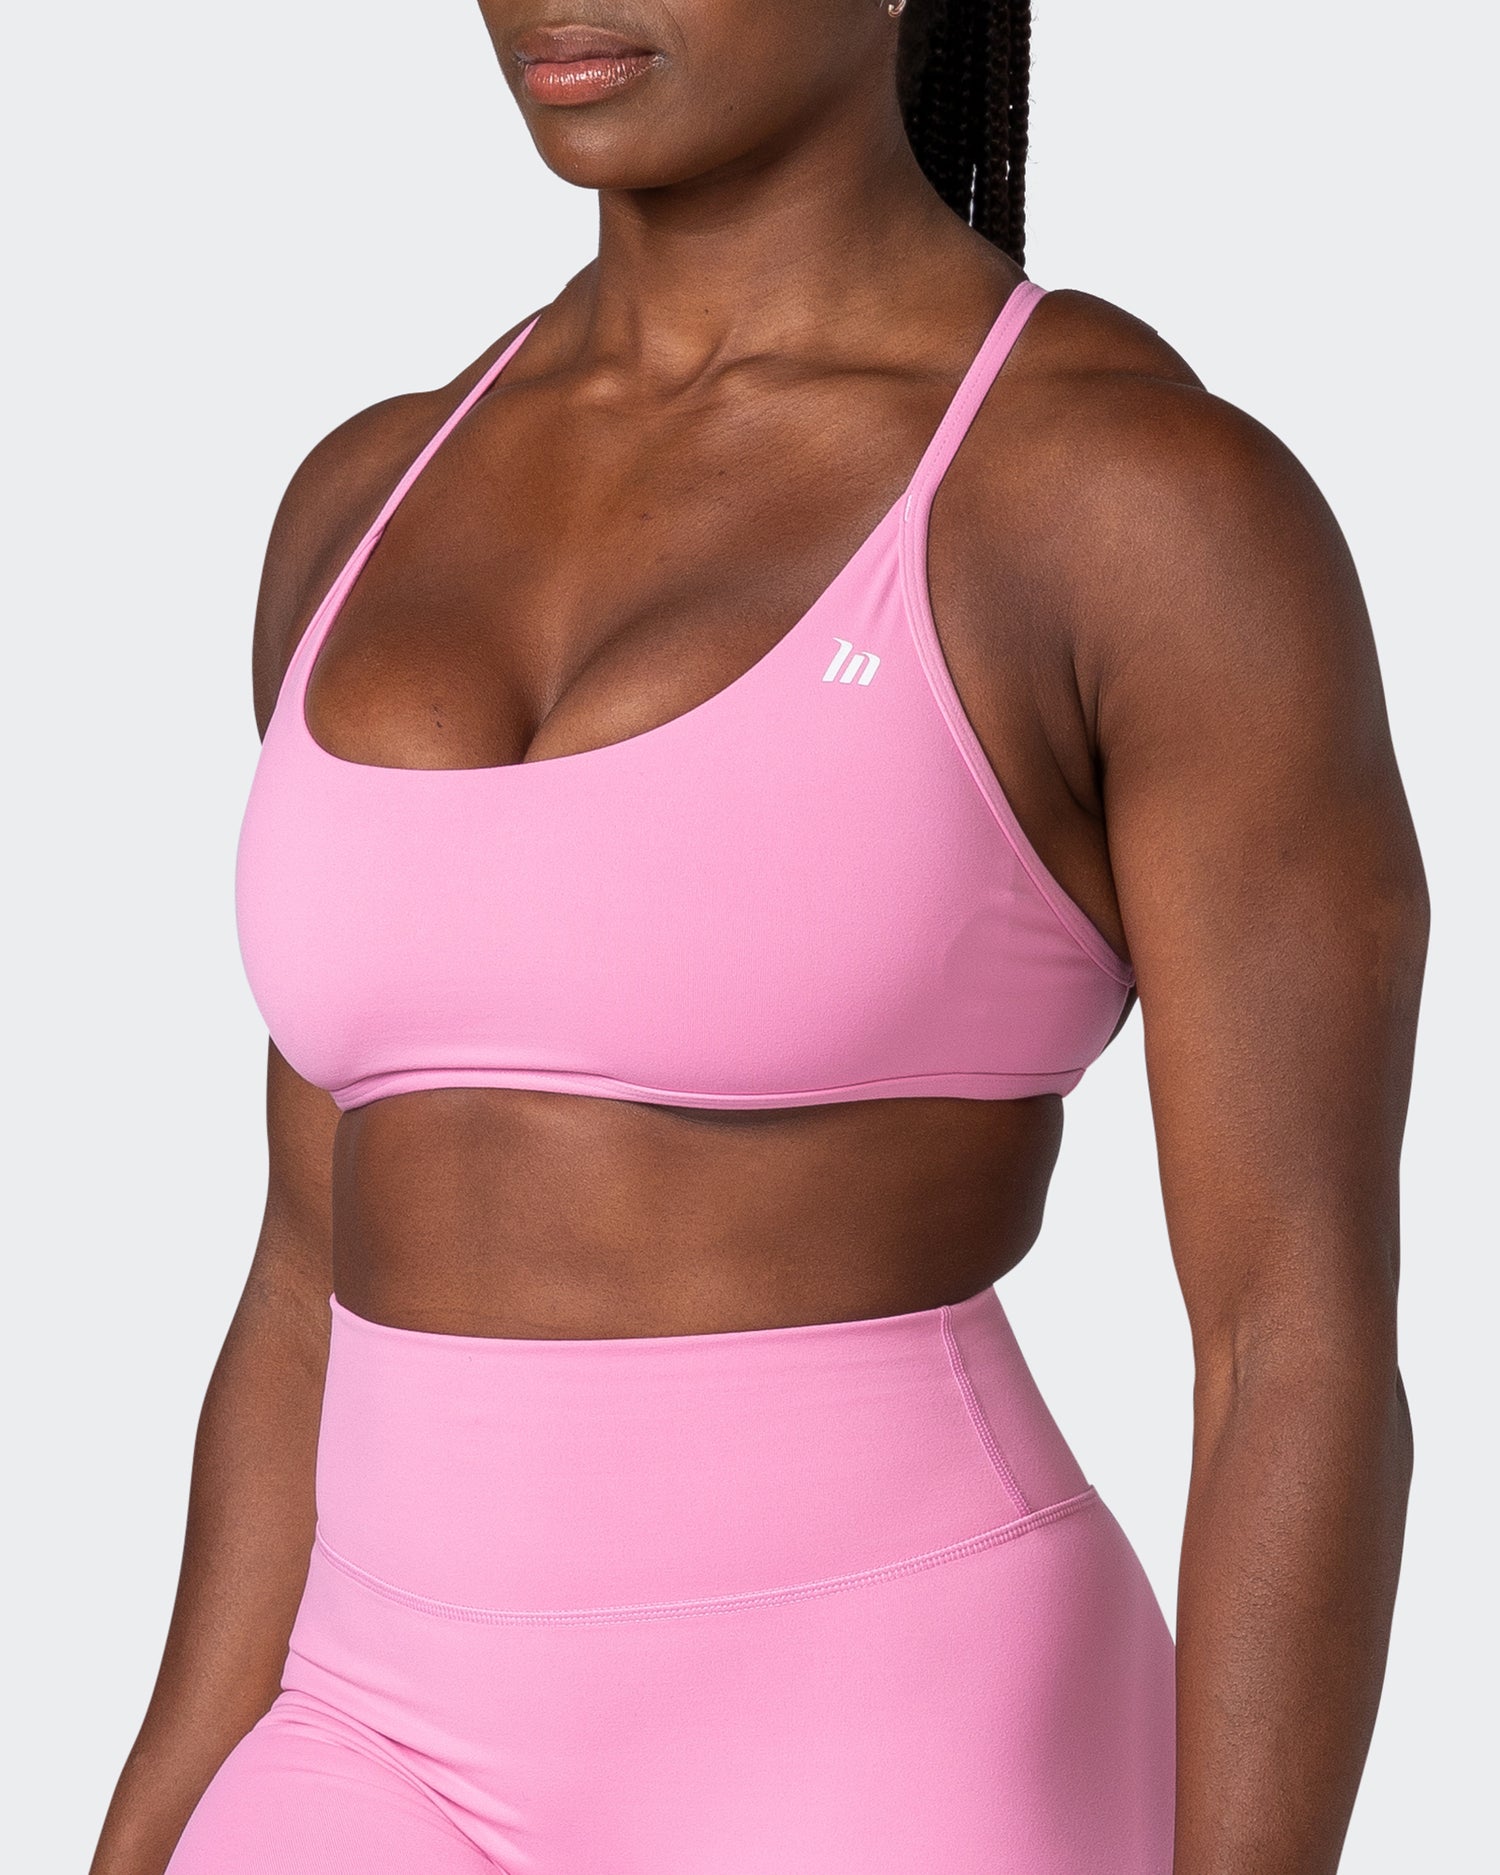 Pro-Fit Seamless Sports Bra Pink Size M - $8 - From Sydney